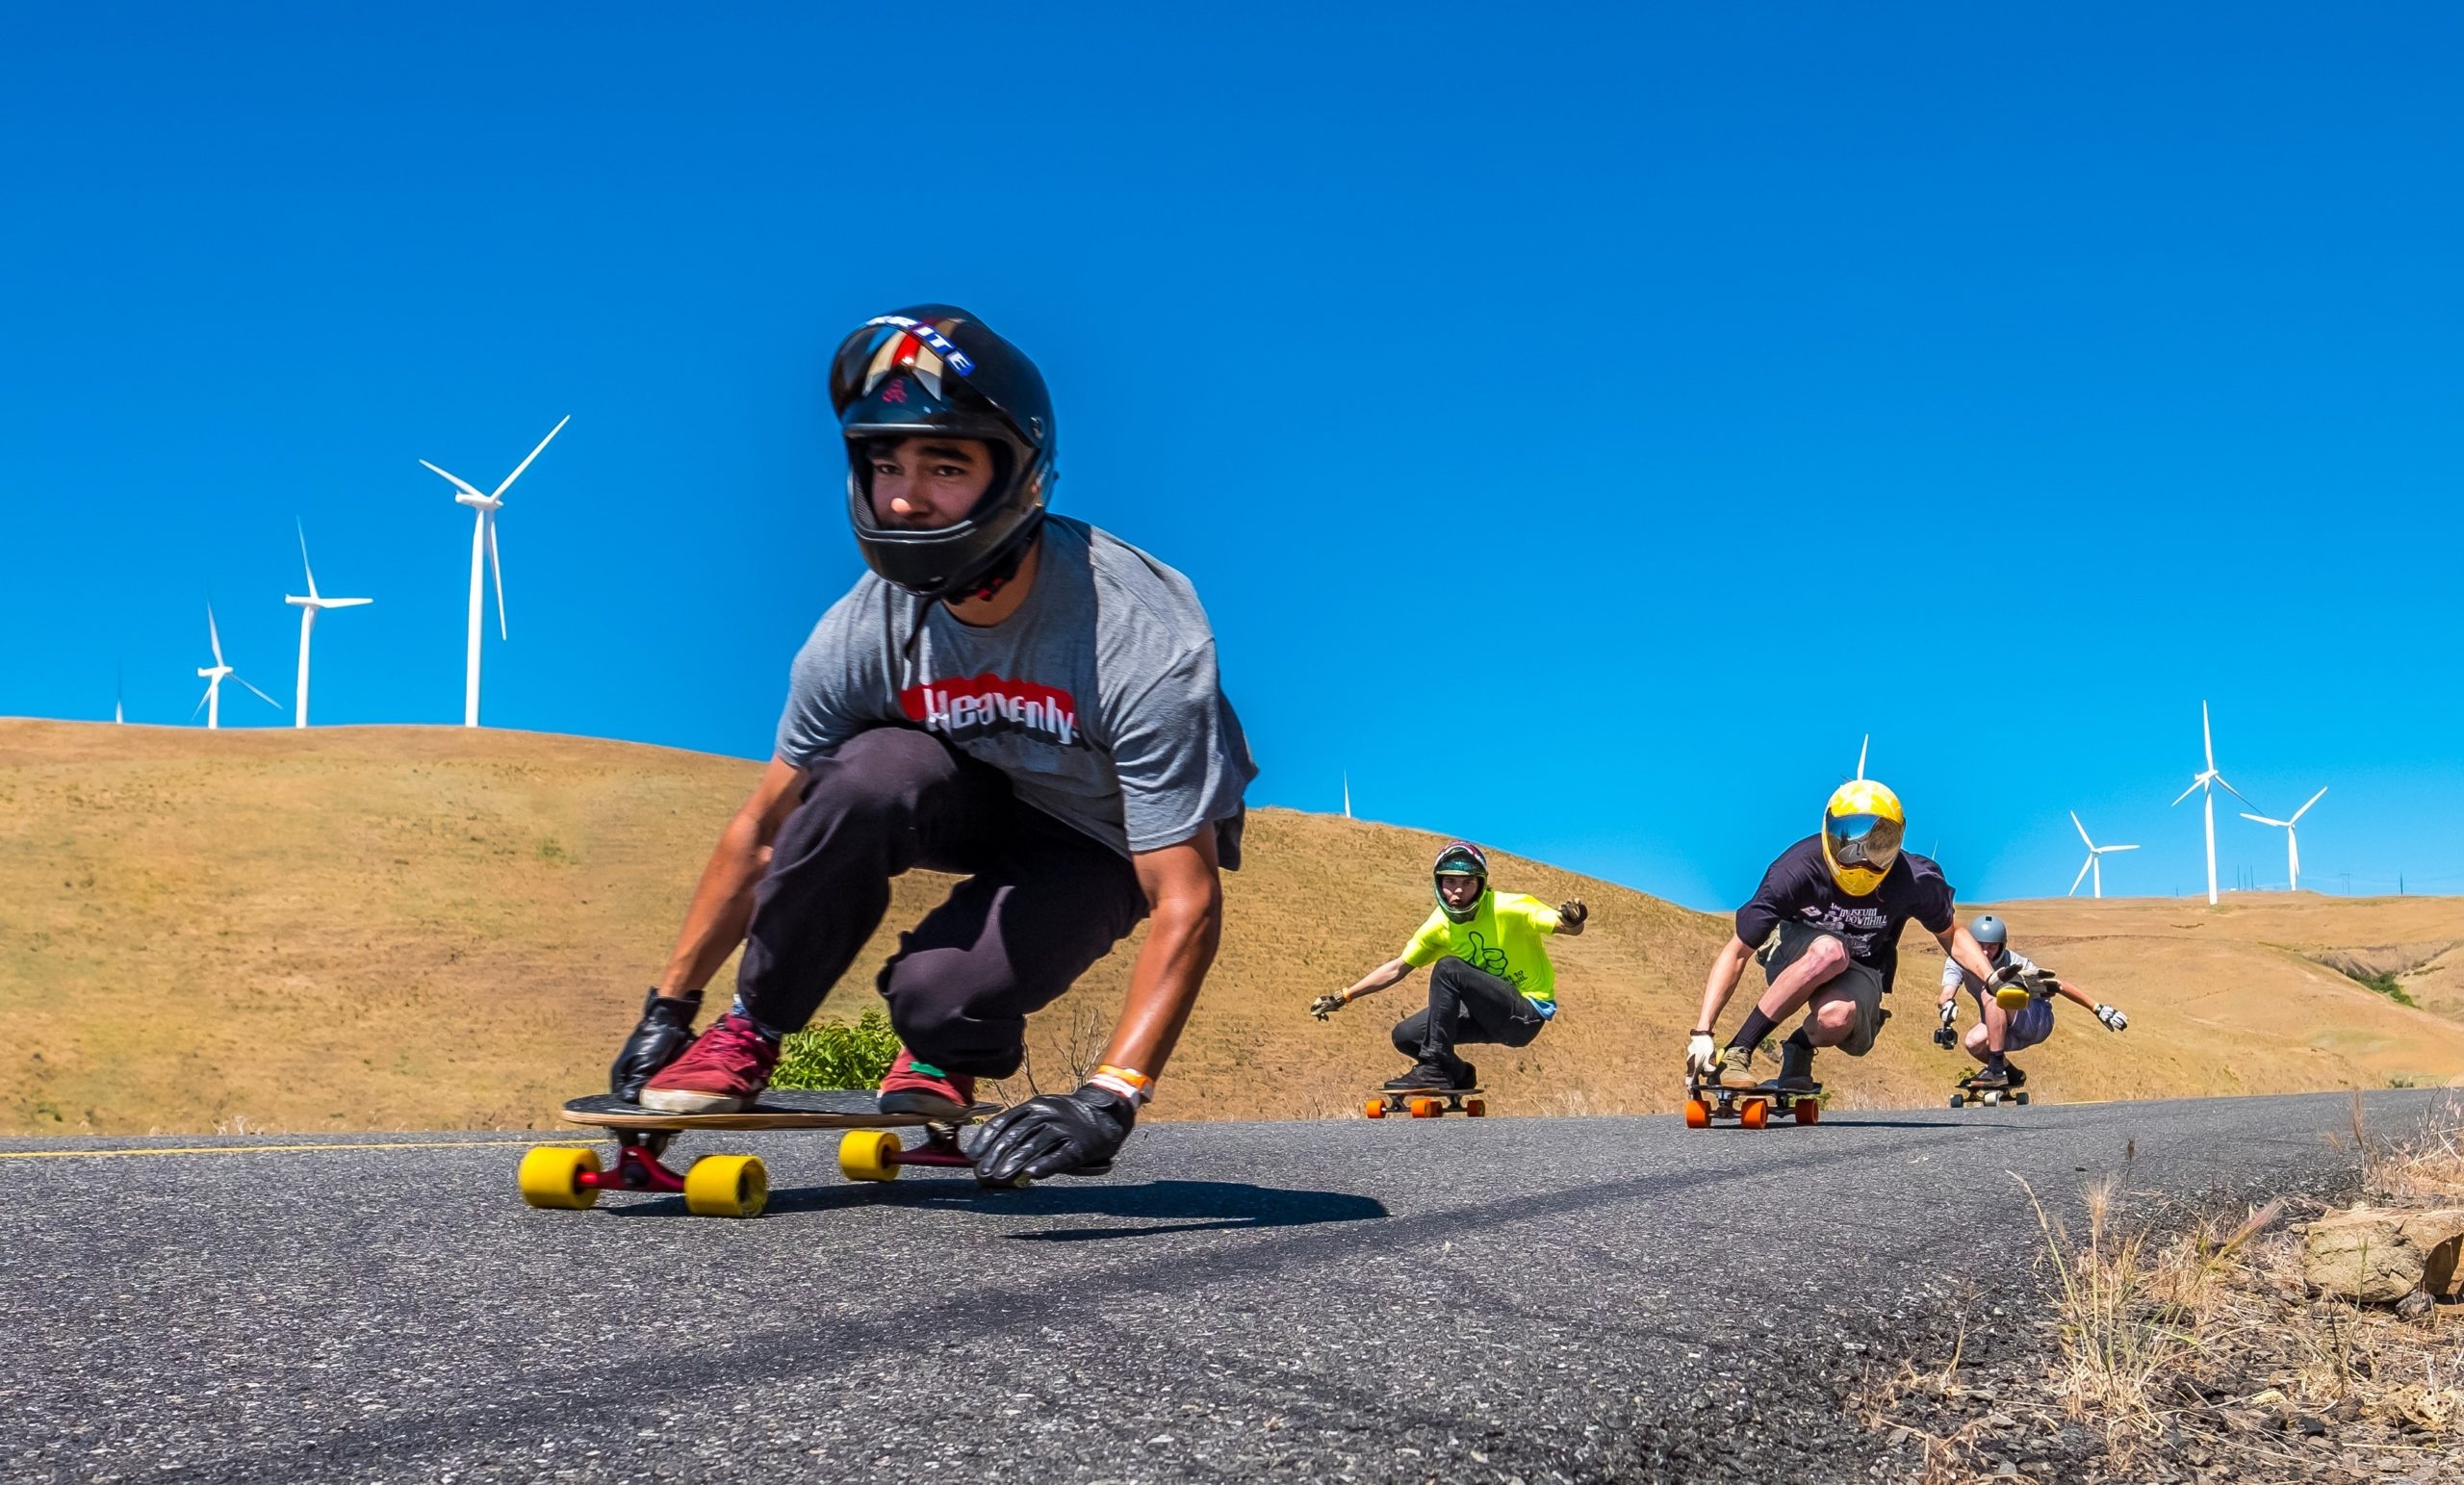 Longboarding: Freestyle skateboarding, The Adrenalina Skateboard Marathon in San Diego, California. 2560x1550 HD Wallpaper.